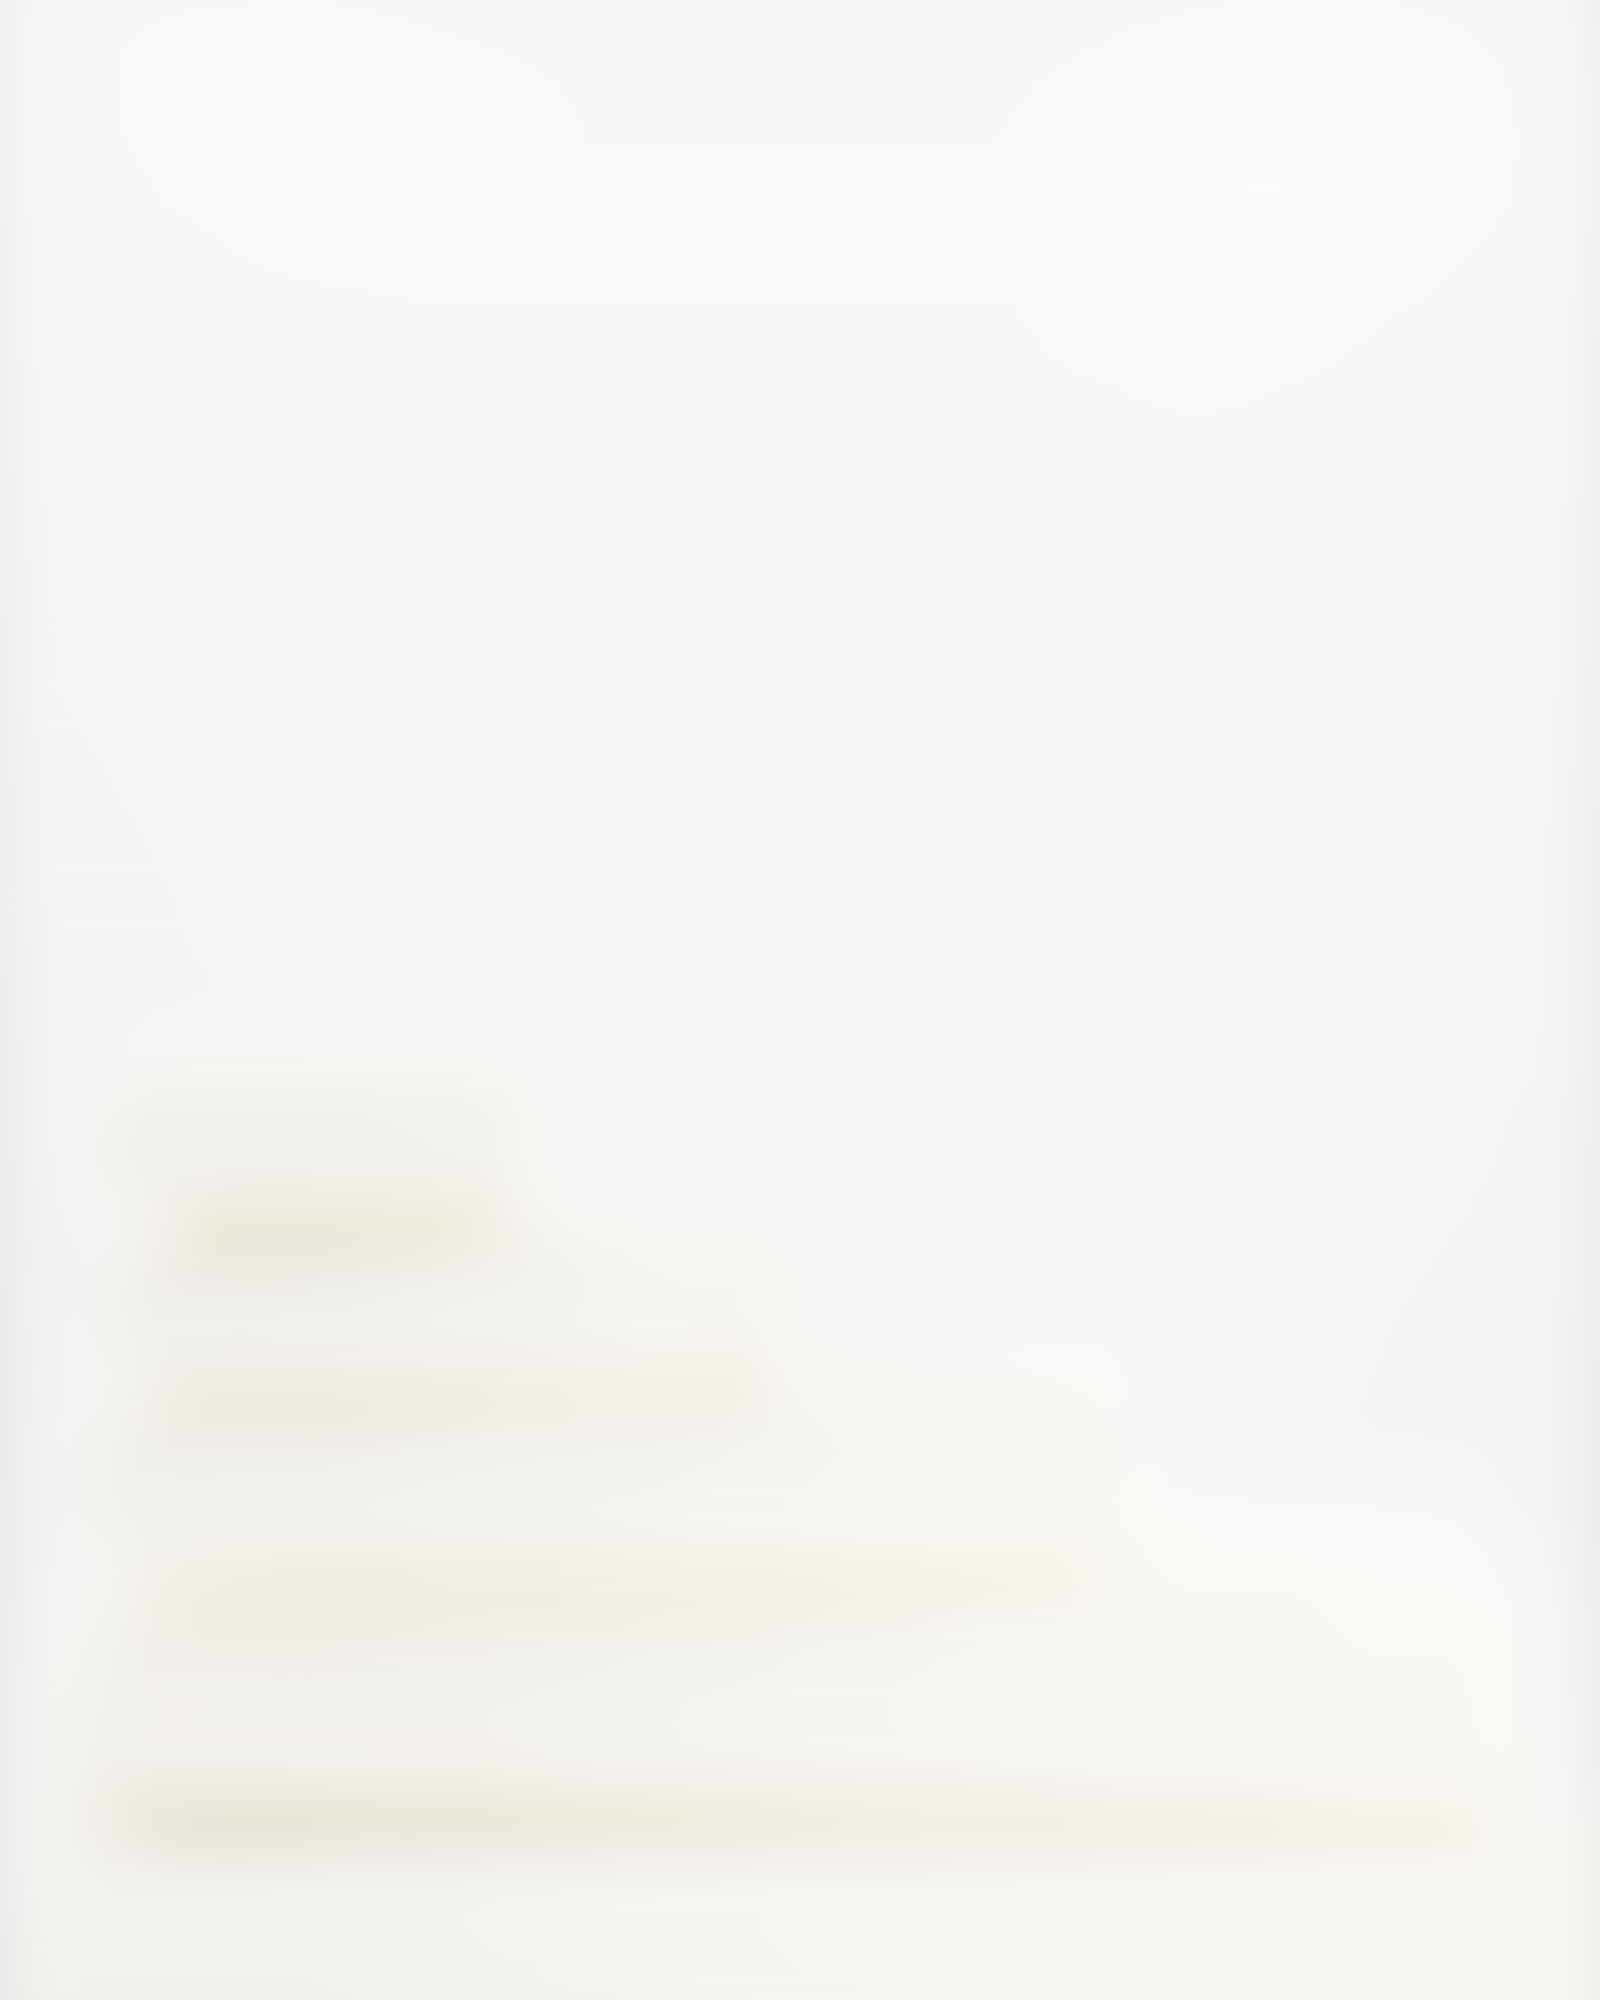 Cawö - Life Style Uni 7007 - Farbe: weiß - 600 - Waschhandschuh 16x22 cm